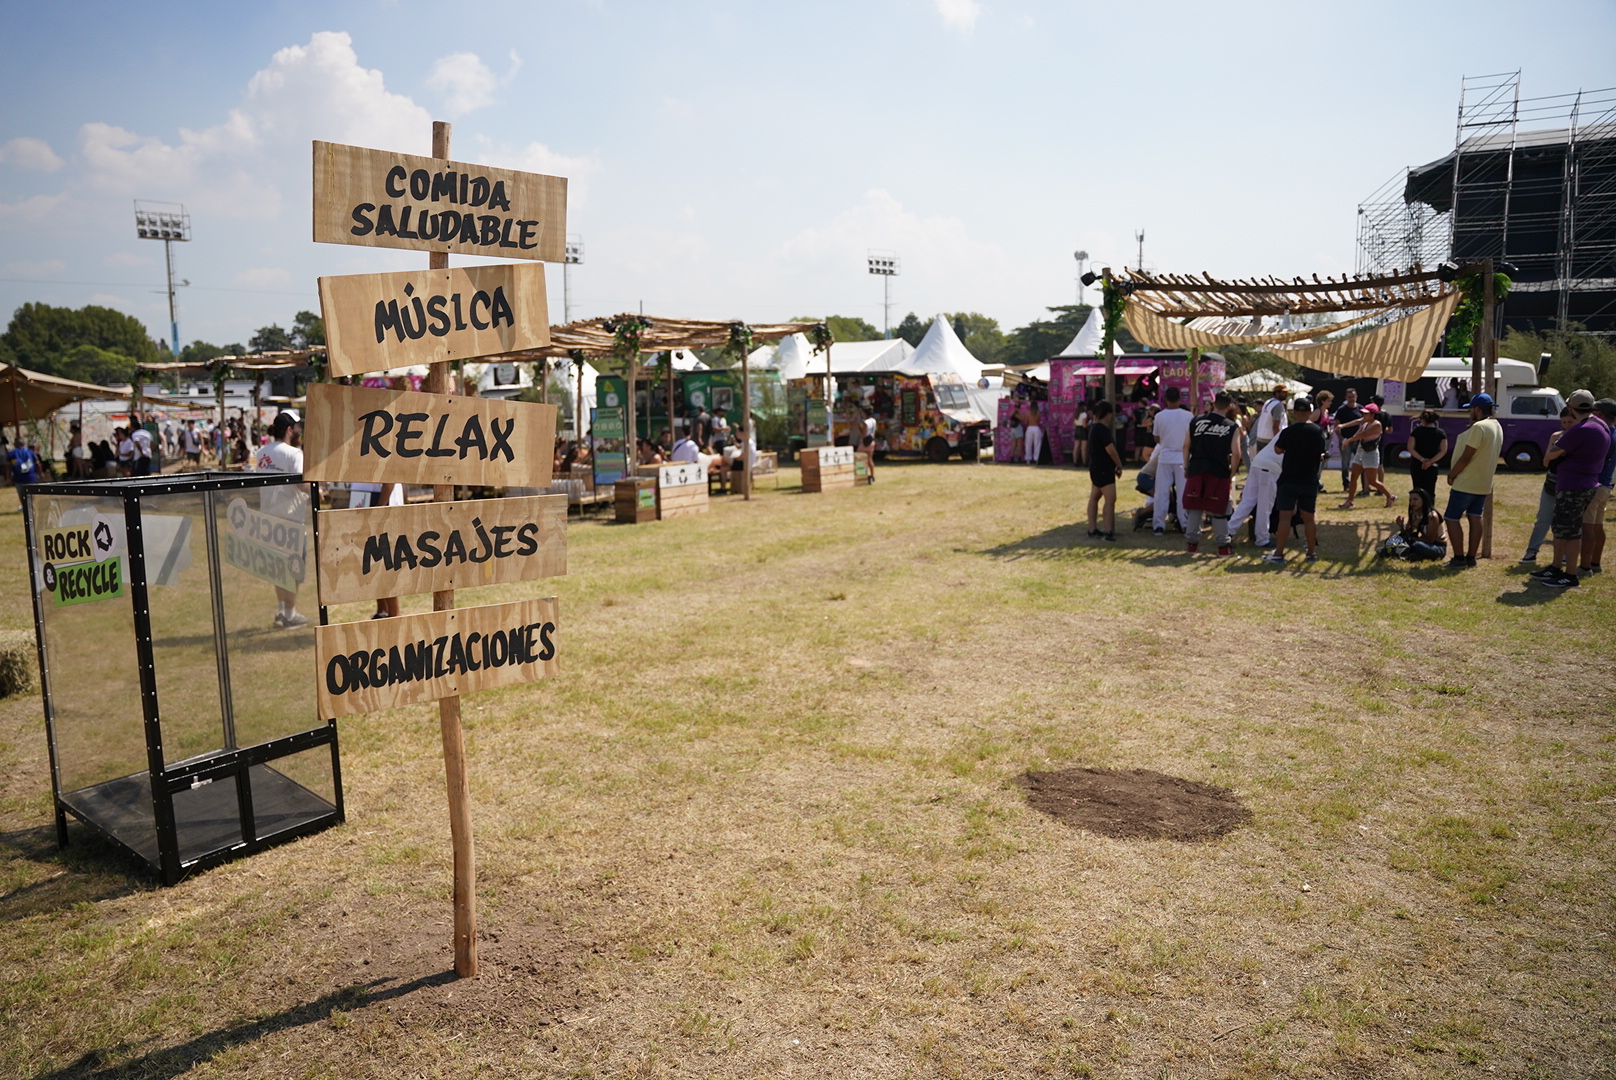 From awareness talks to plant-based menus: Lollapalooza's ecological proposal (Franco Fafasuli)